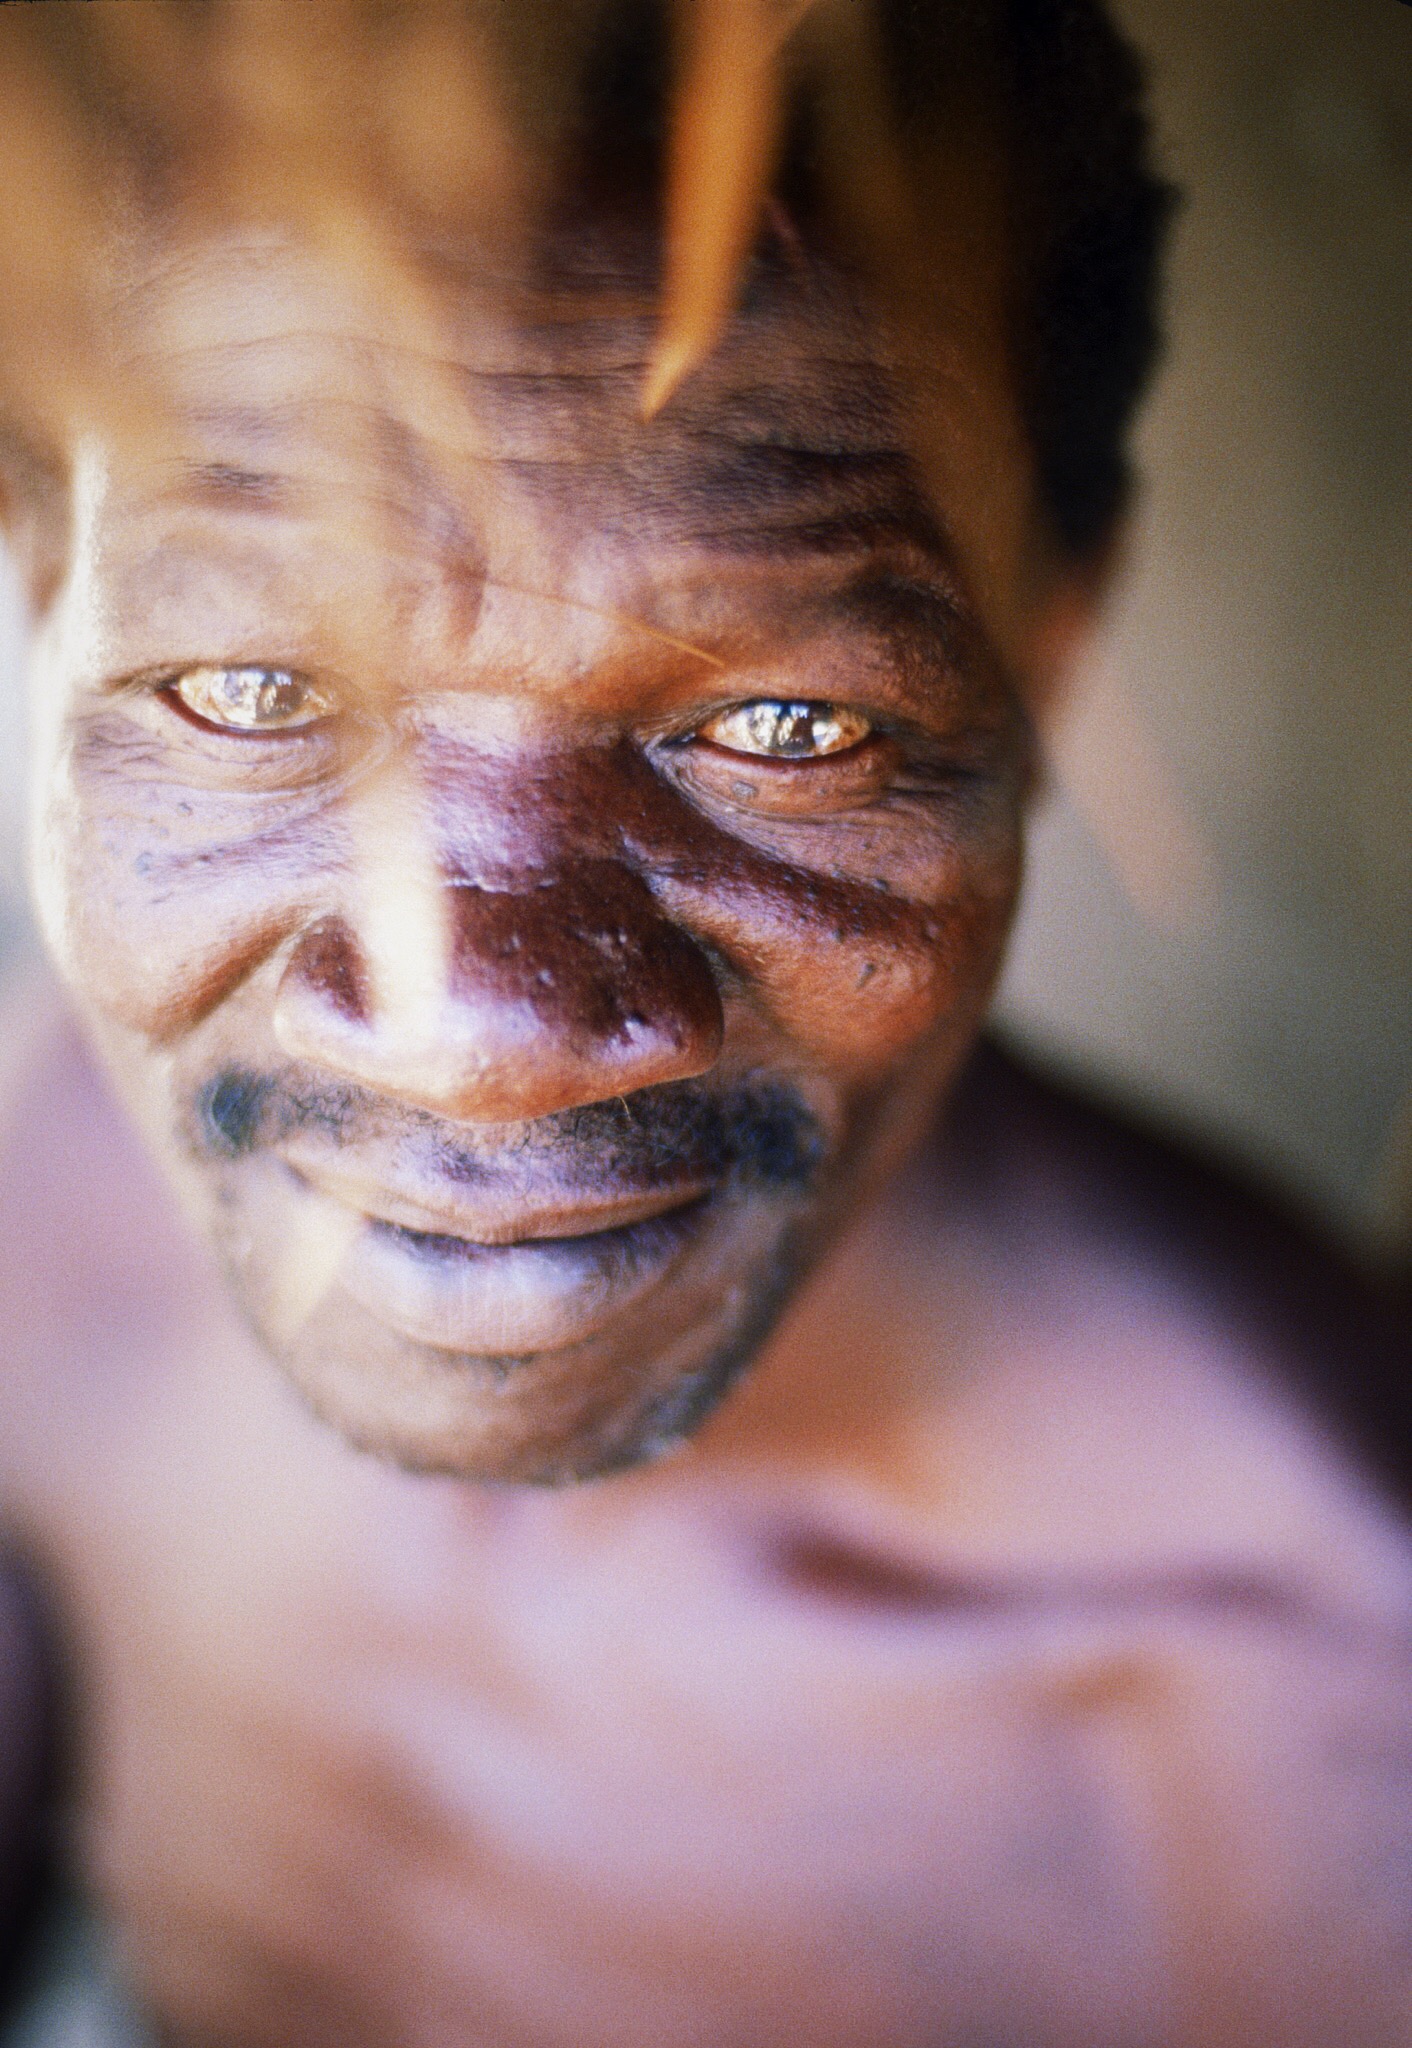 Man in northern Uganda.